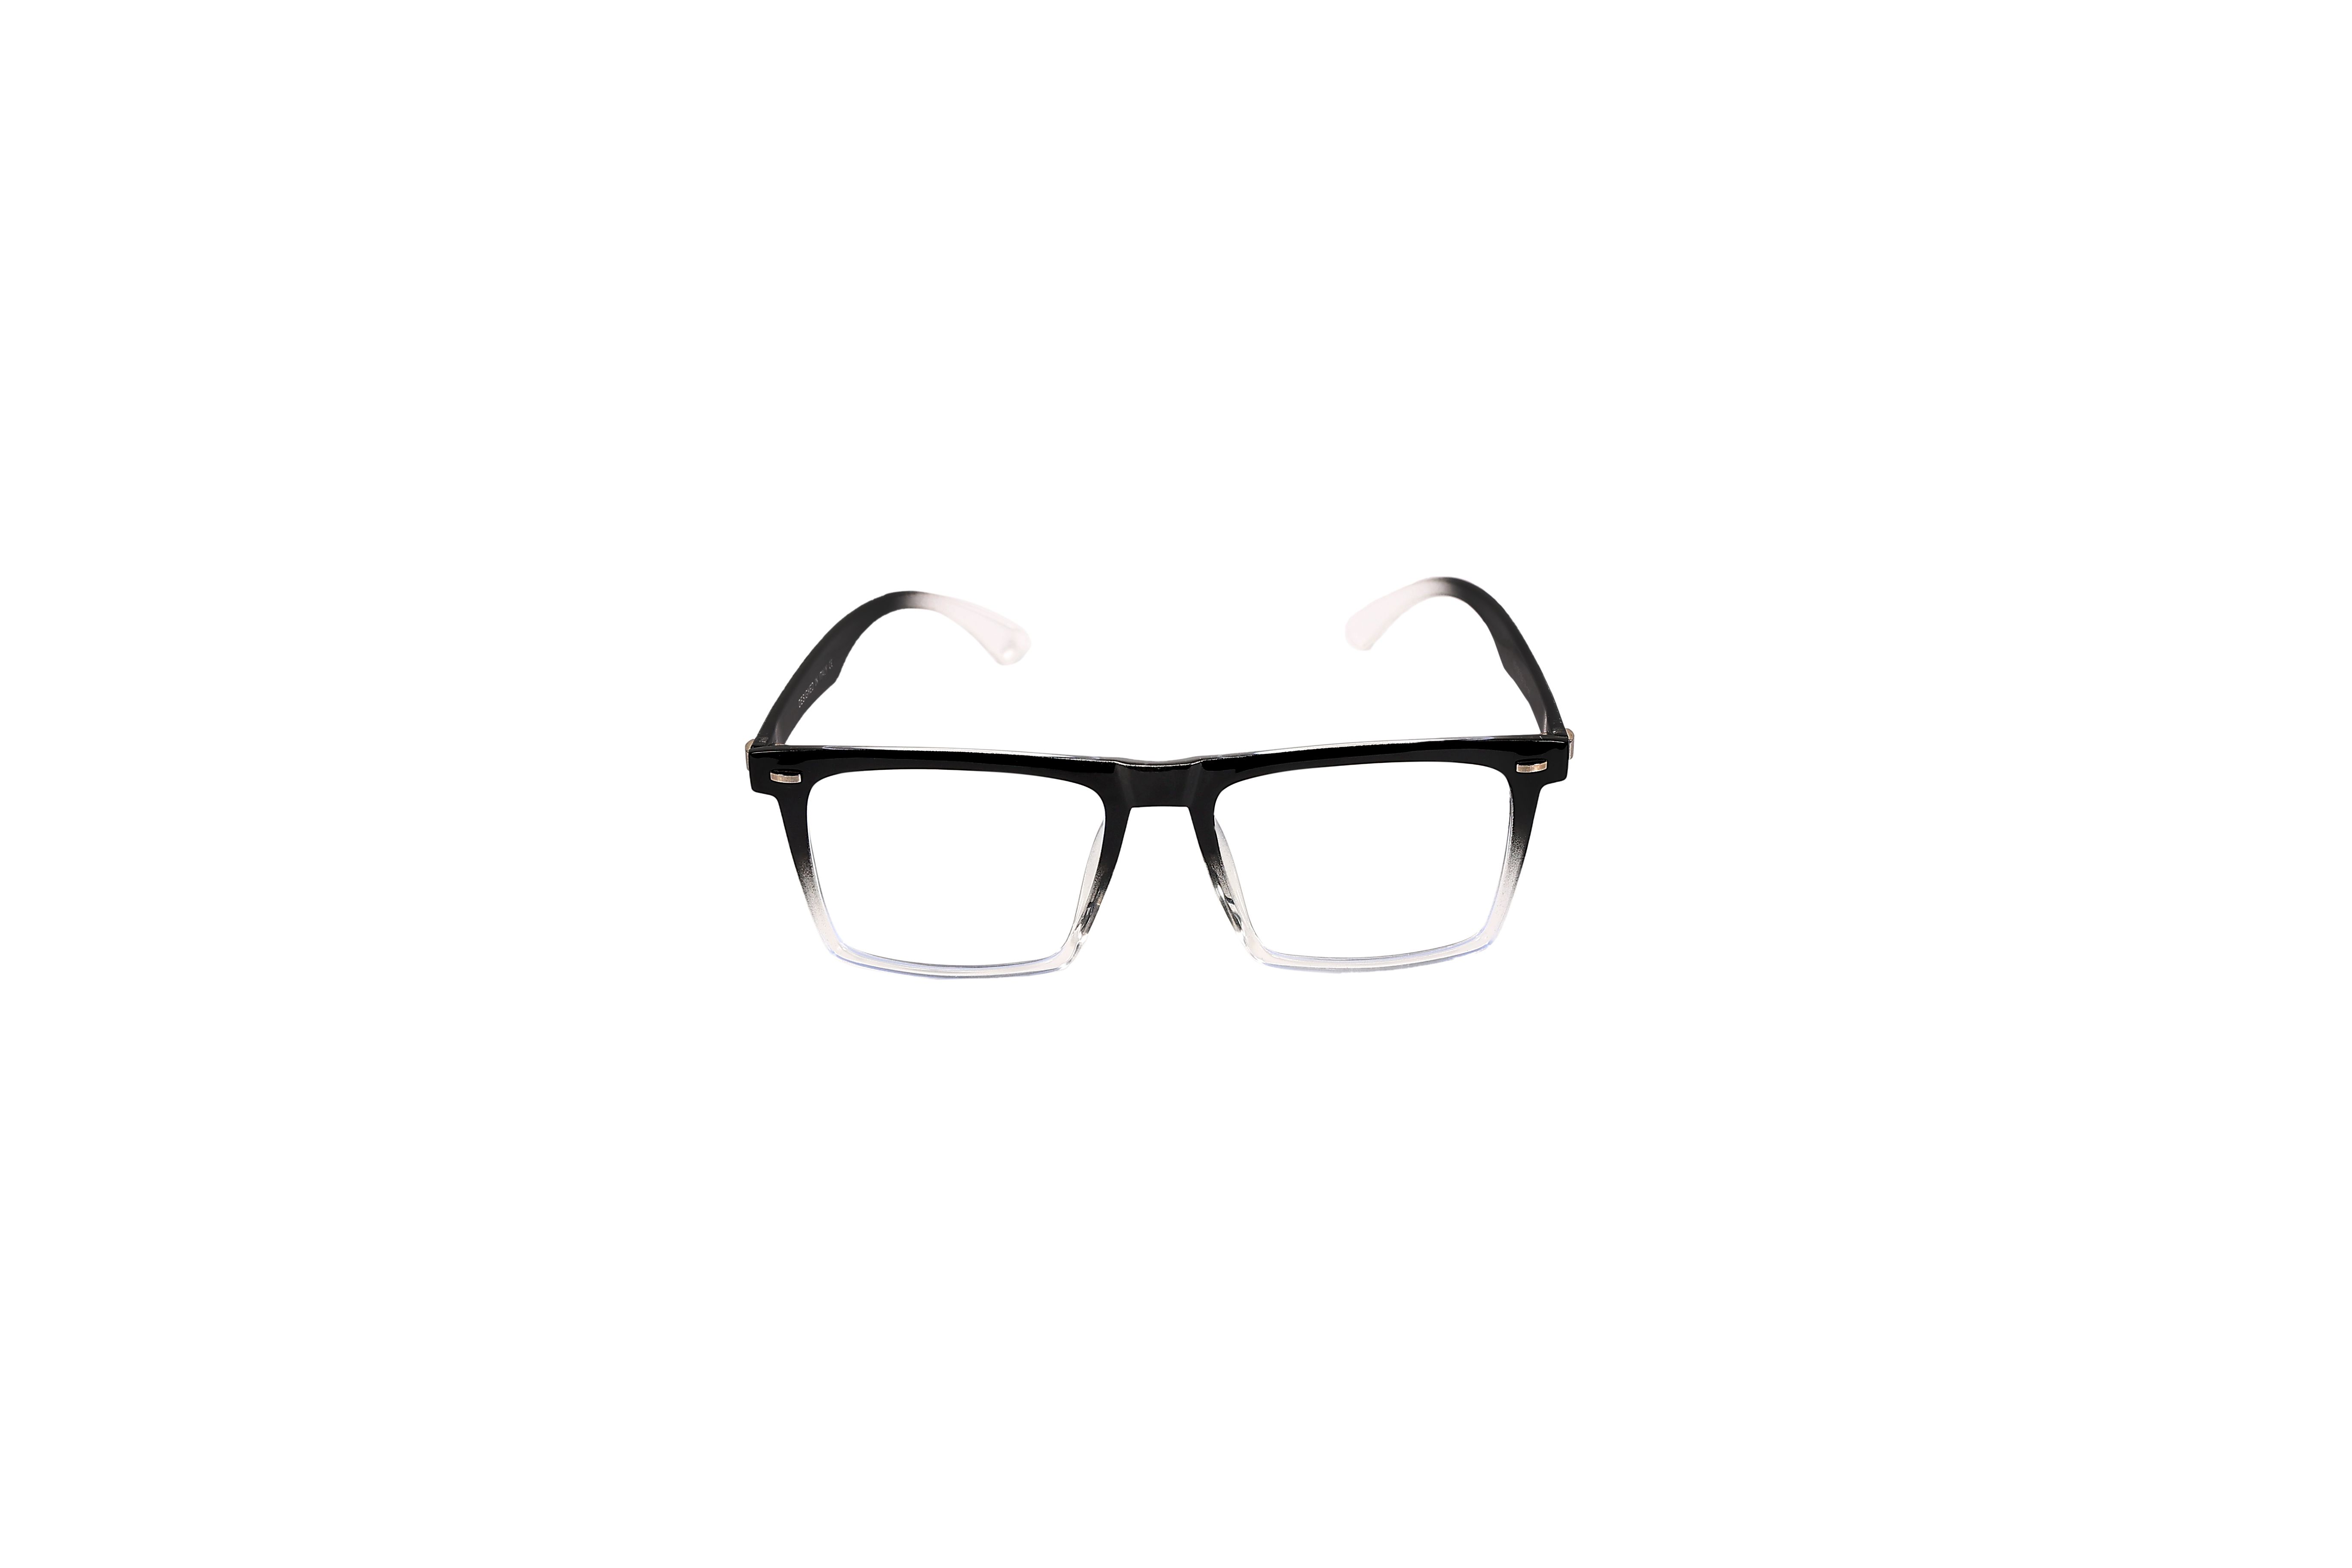     			SANEYEWEAR - White Full Rim Square Computer Glasses ( Pack of 1 )